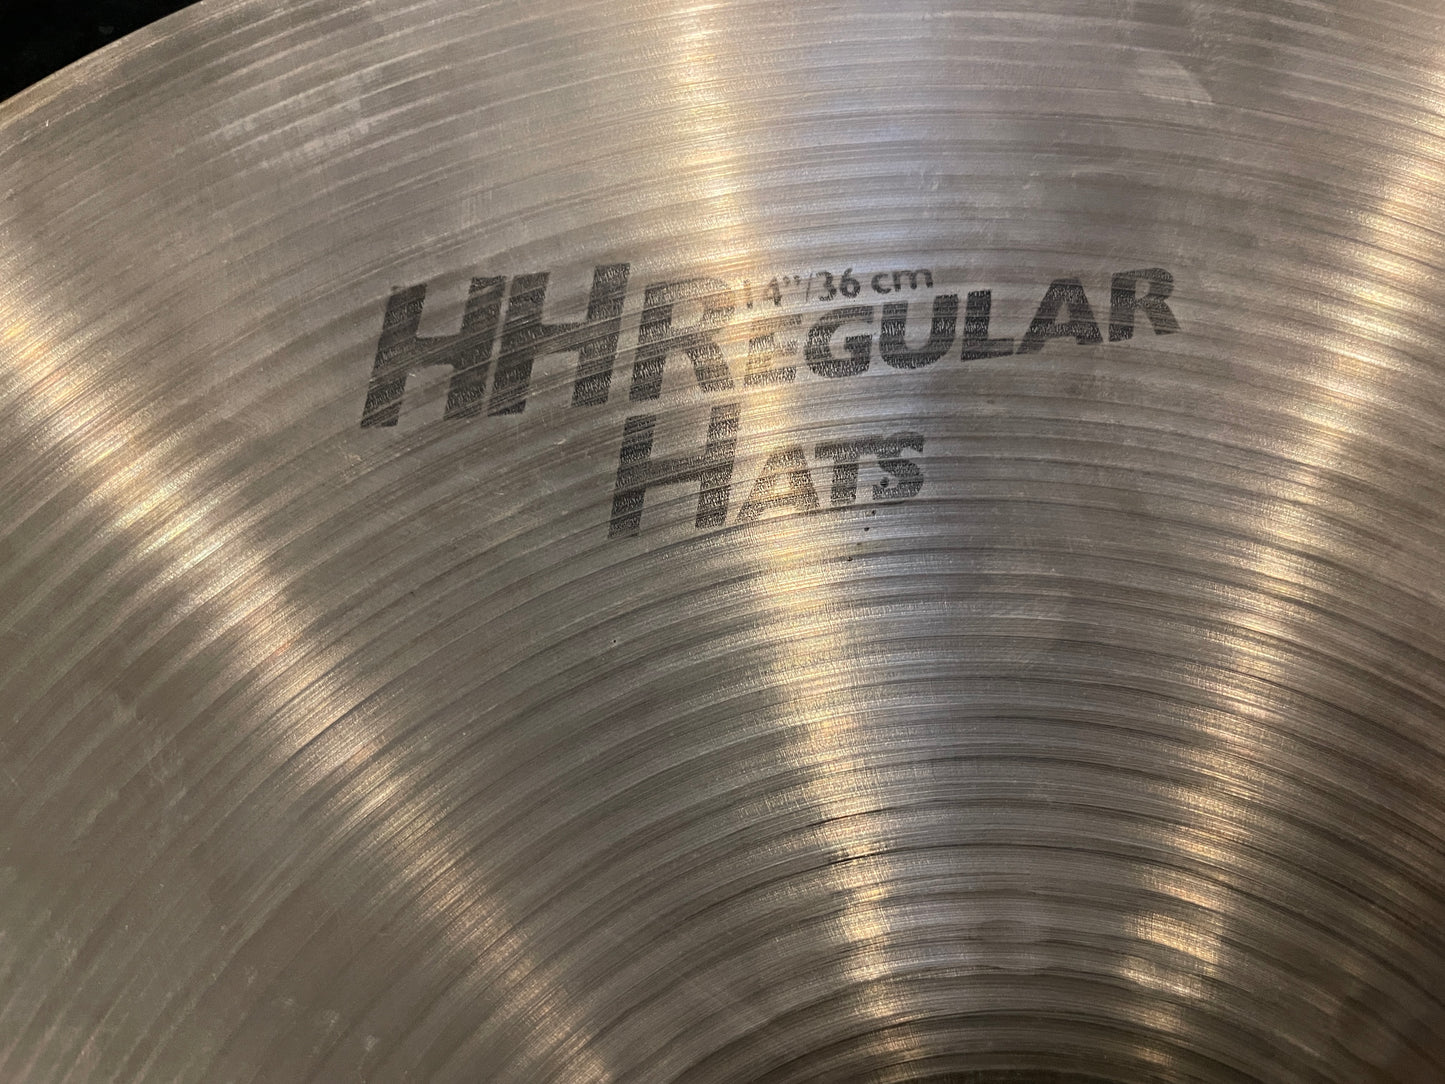 14" Sabian HH Regular Hats Hi-Hat Cymbal Pair 1050g/1340g